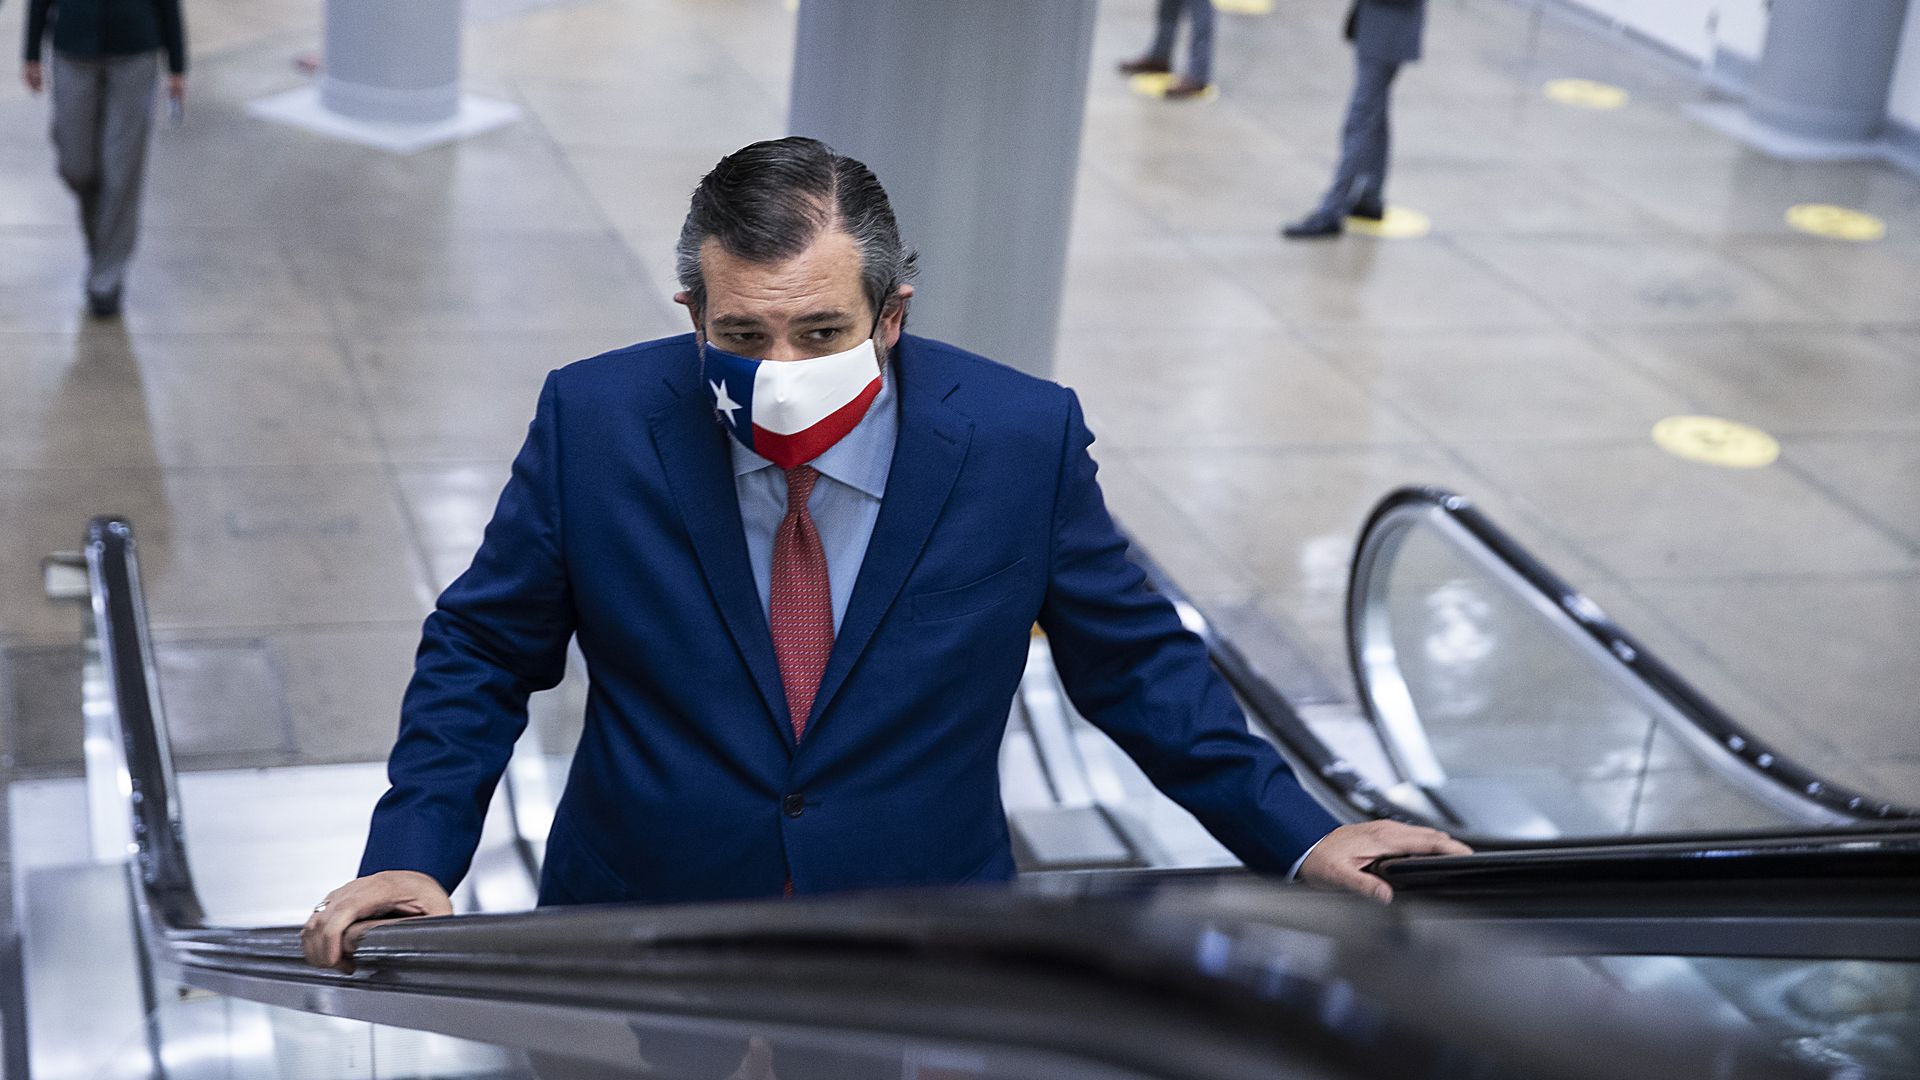 Senator Ted Cruz rides an escalator into the U.S. Capitol last month.